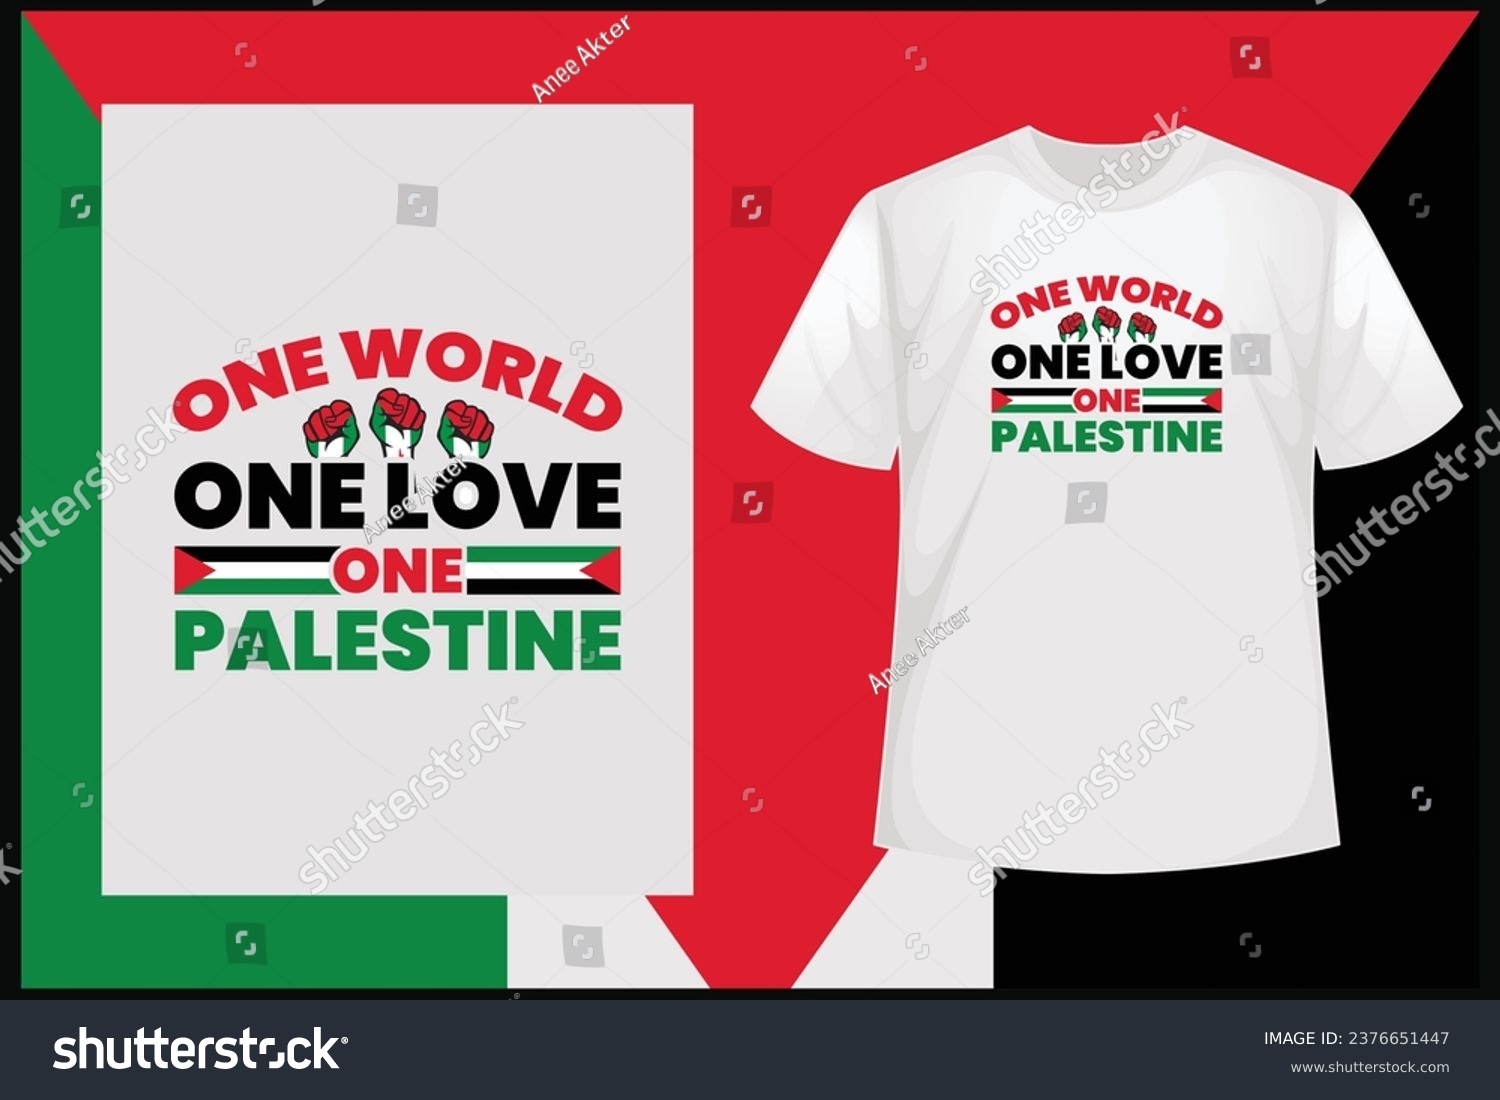 SVG of Free Palestine T shirt, Free Palestine, Stand with Palestine, Activist Shirt, Save Palestine, Human Rights, Equality T-Shirt, Gaza PNG svg